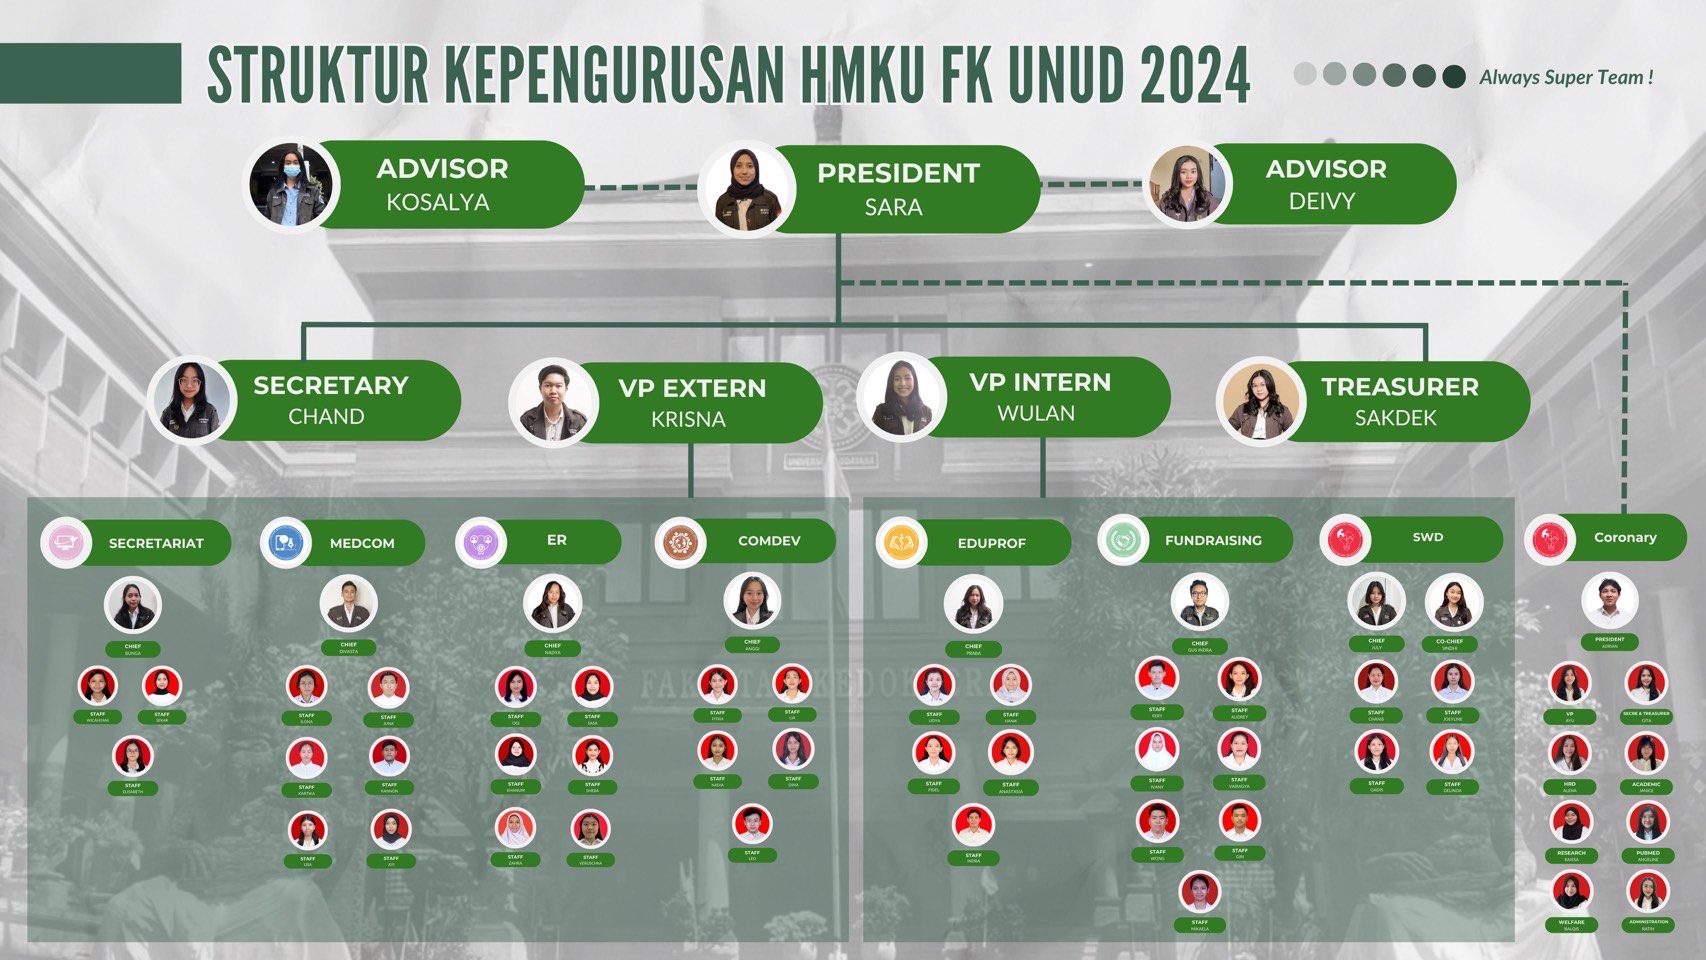 Struktur Kepengurusan HMKU FK Unud Periode 2023